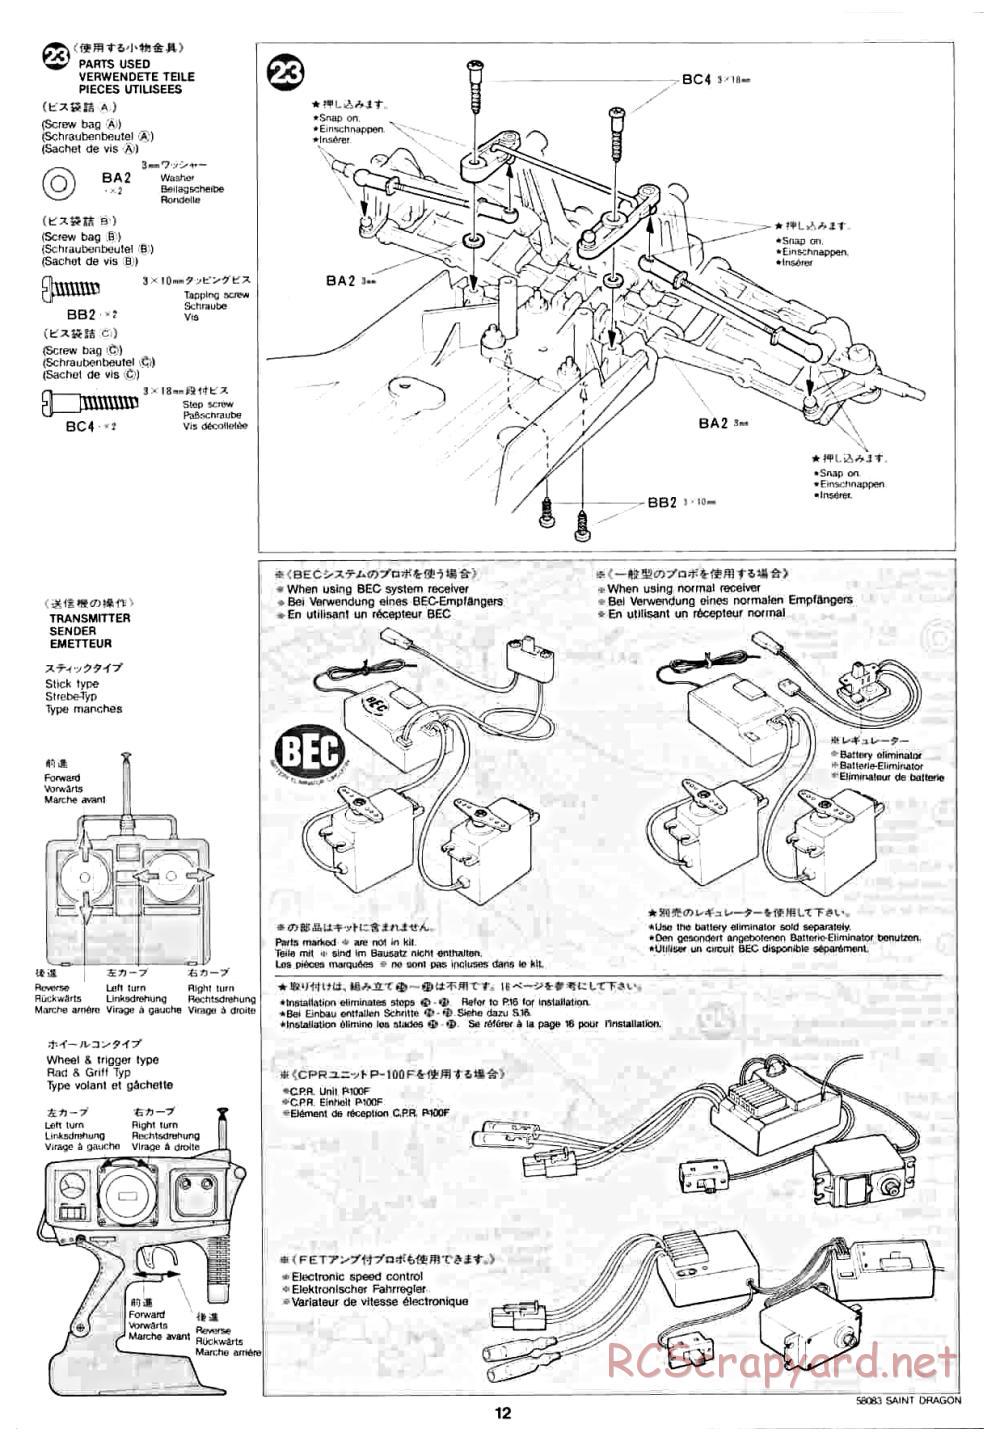 Tamiya - Saint Dragon - 58083 - Manual - Page 12